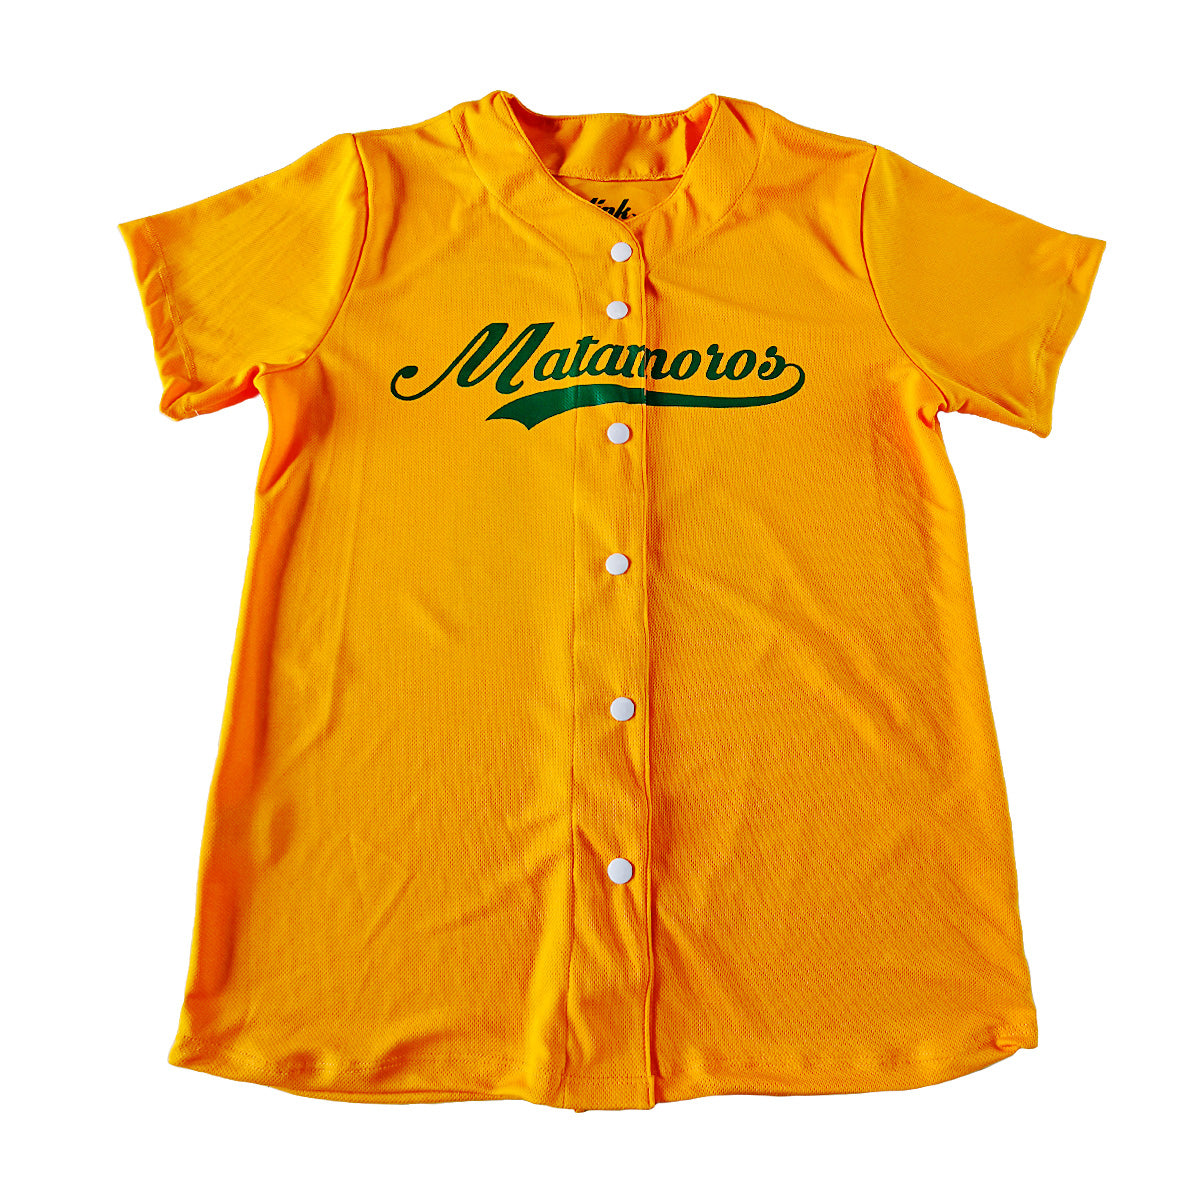 jersey camisola beisbol softbol personalizable amarillo dama en guadalajara